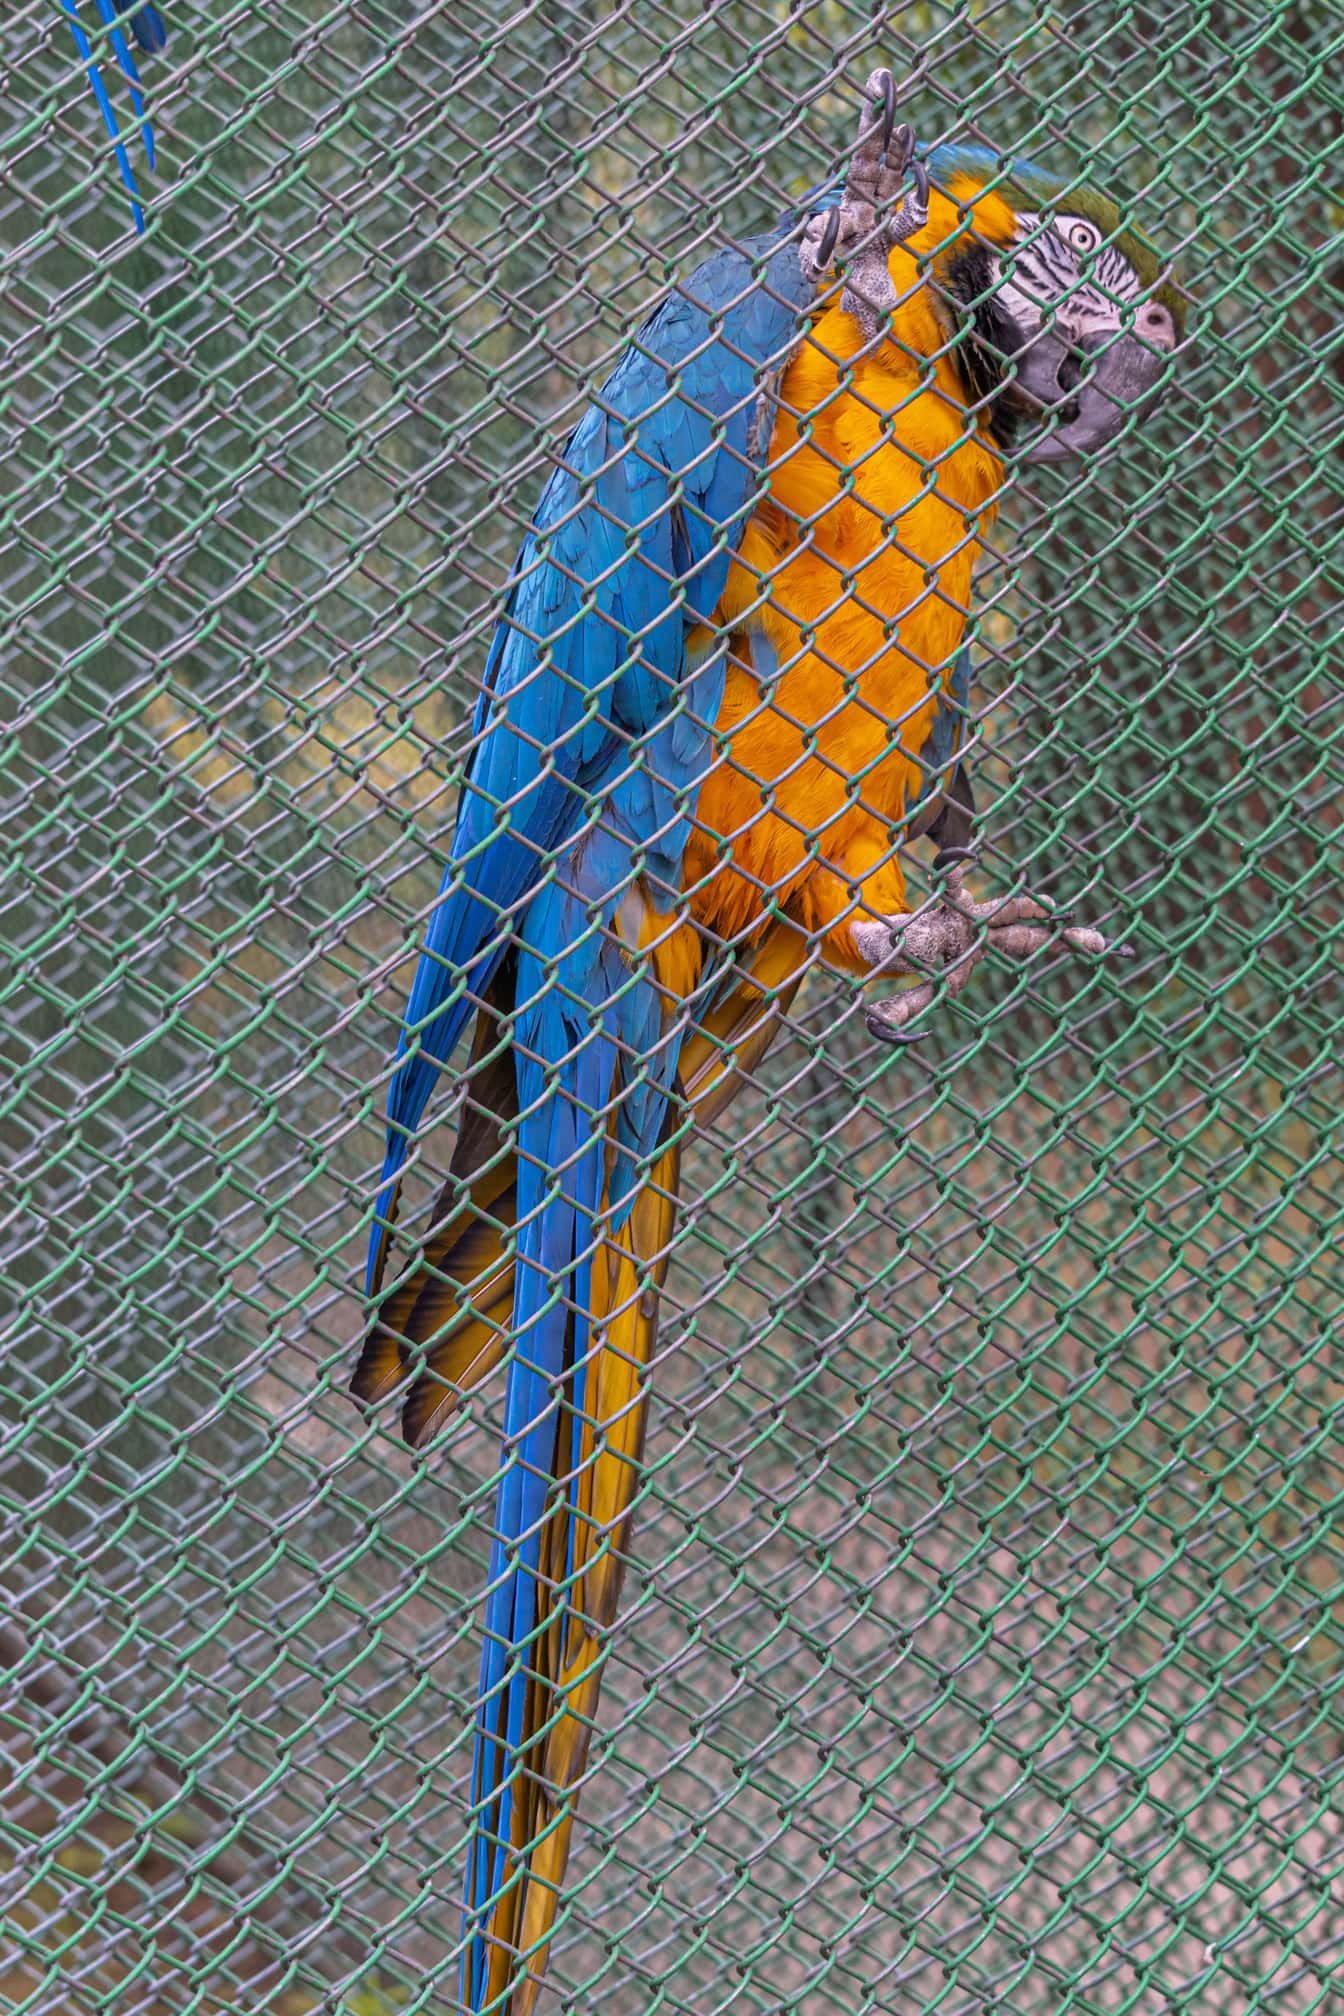 Blå-og-guld ara (Ara ararauna) papegøjefugl i bur i zoopark